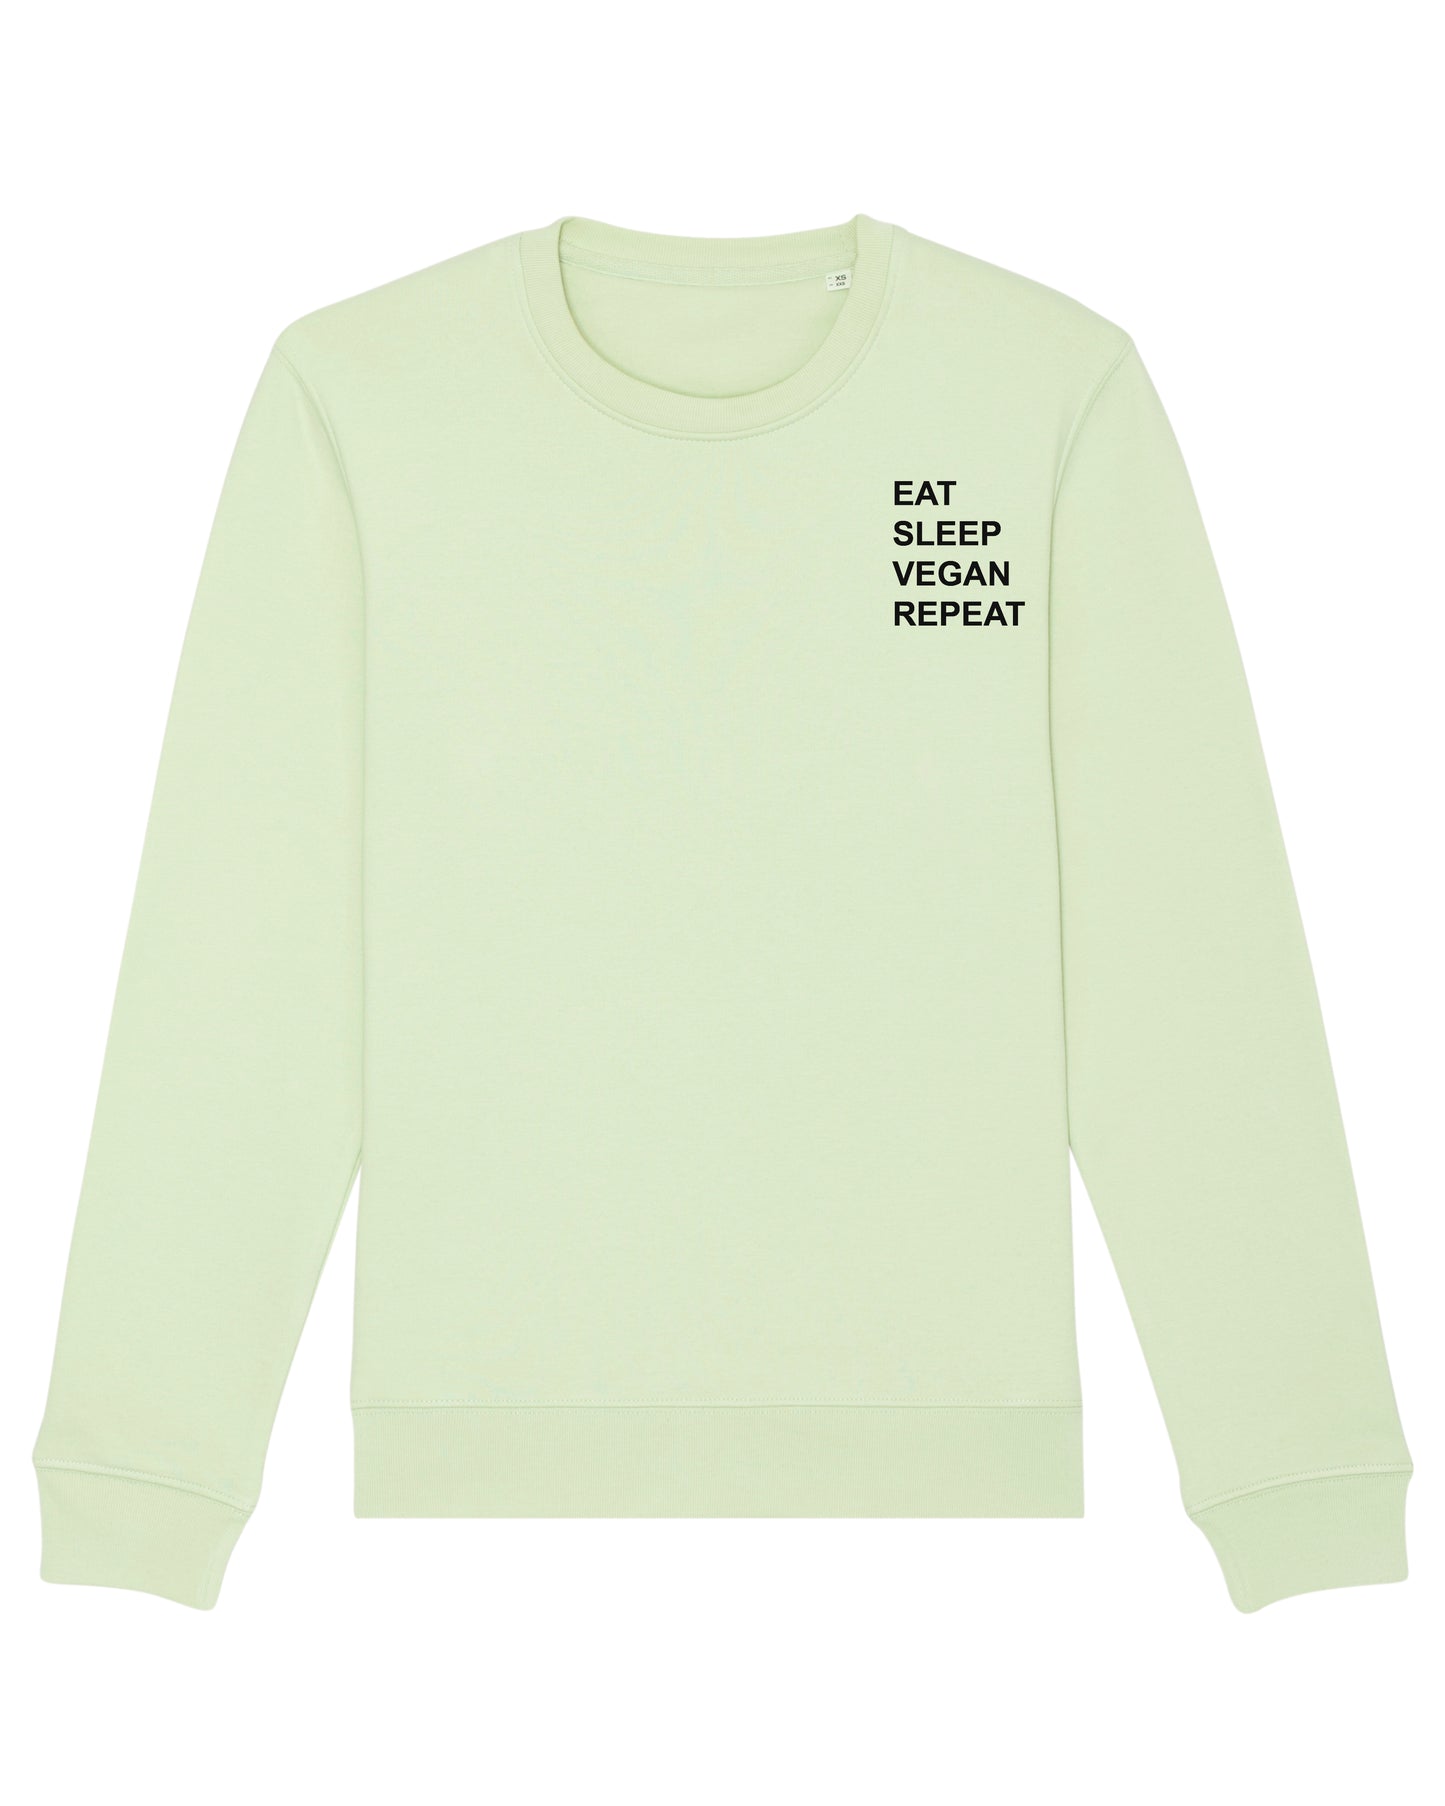 Eat Sleep Vegan Repeat Sweater Women/Unisex